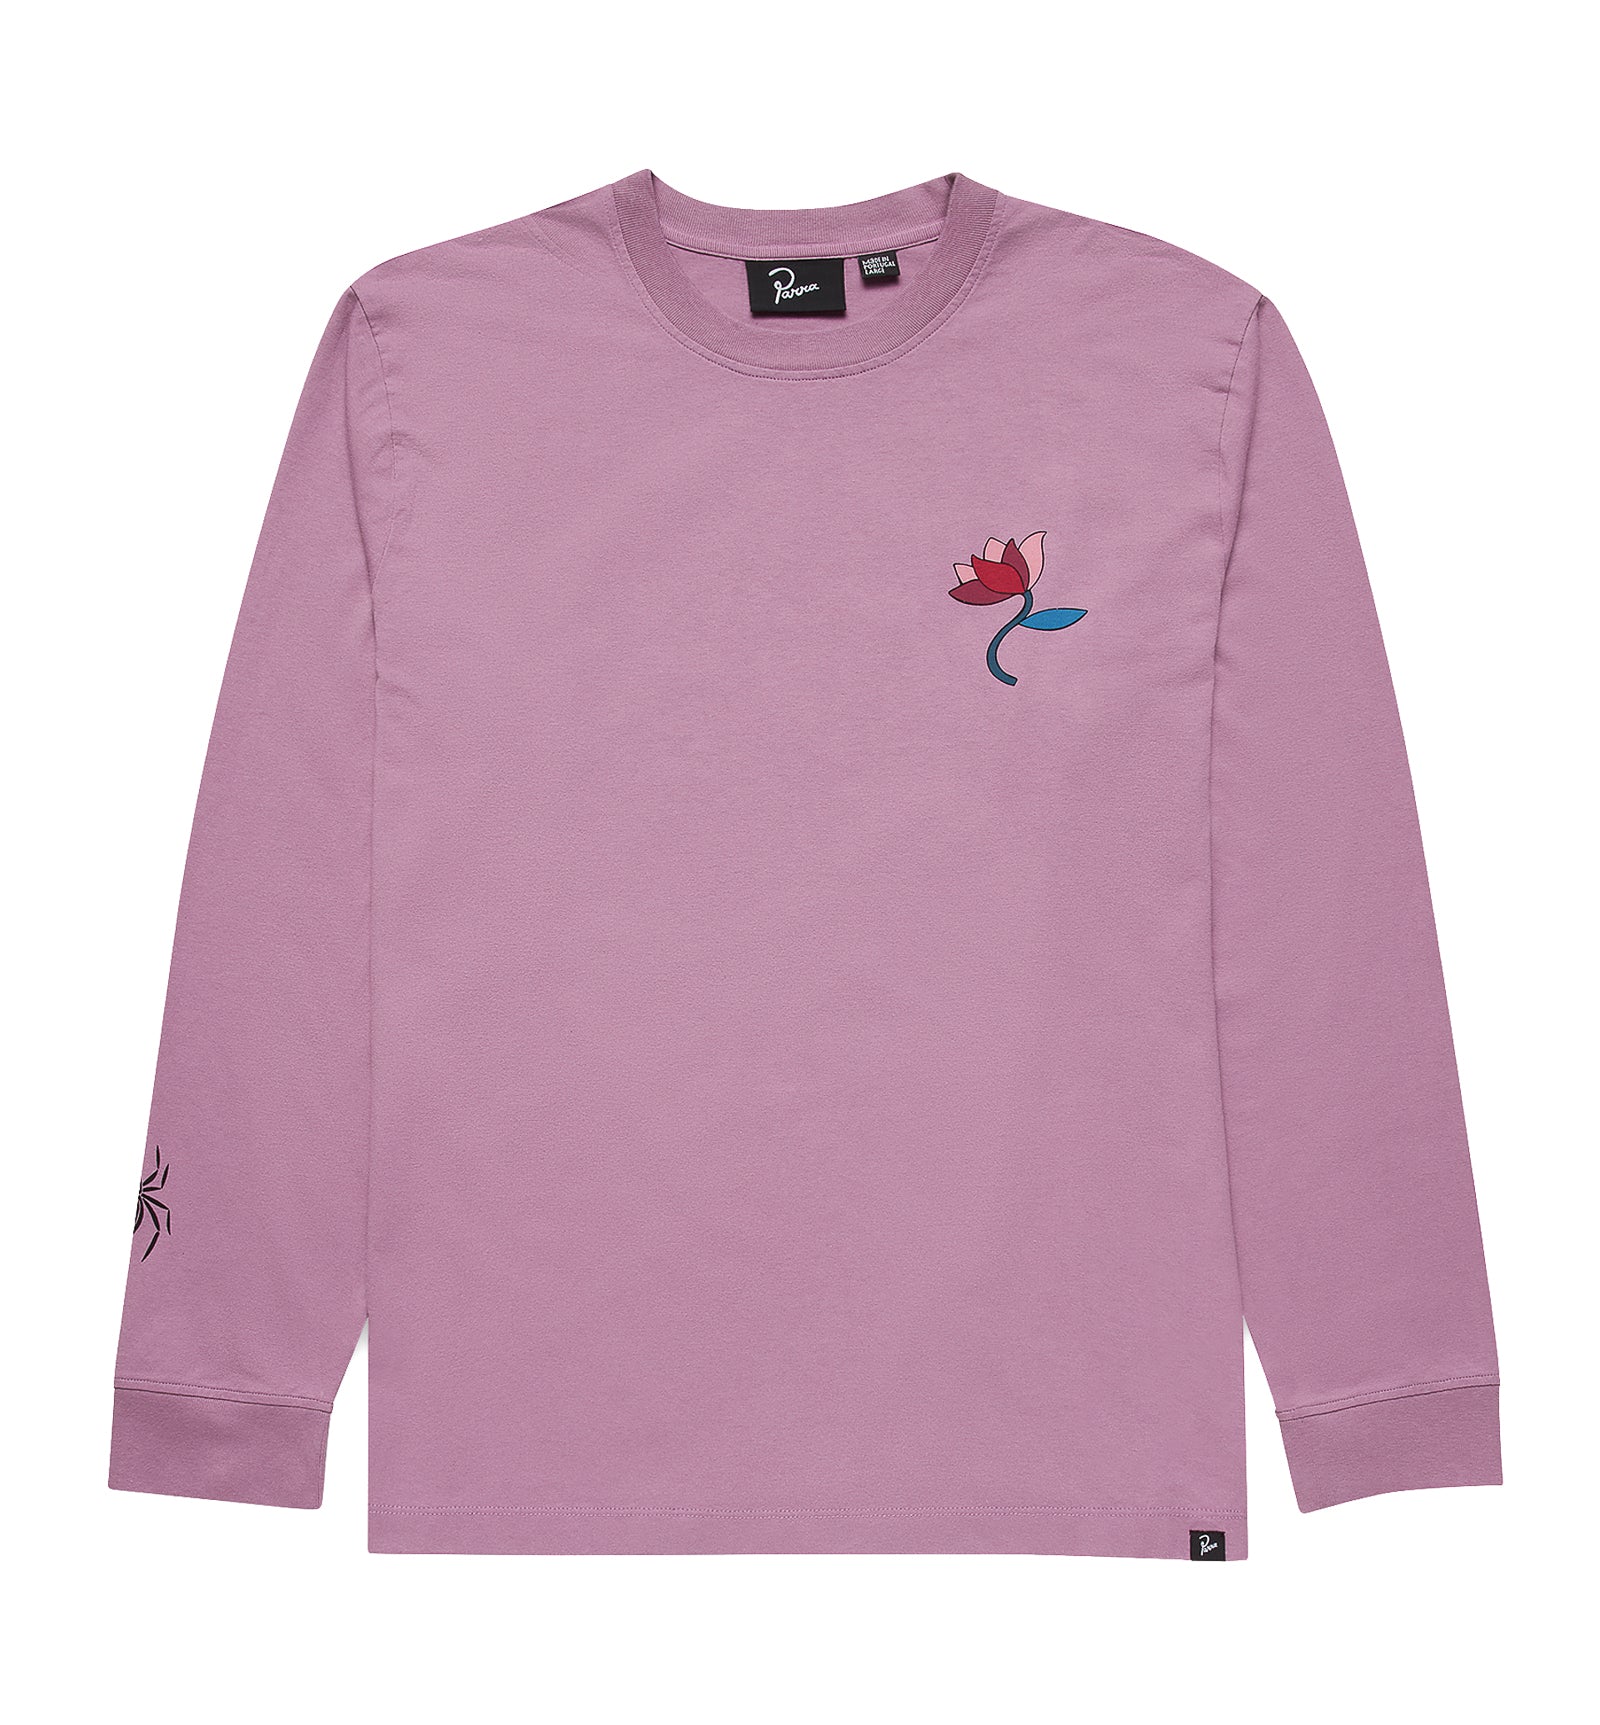 by Parra Cloudy Star Longsleeve T-Shirt 'Lavender'